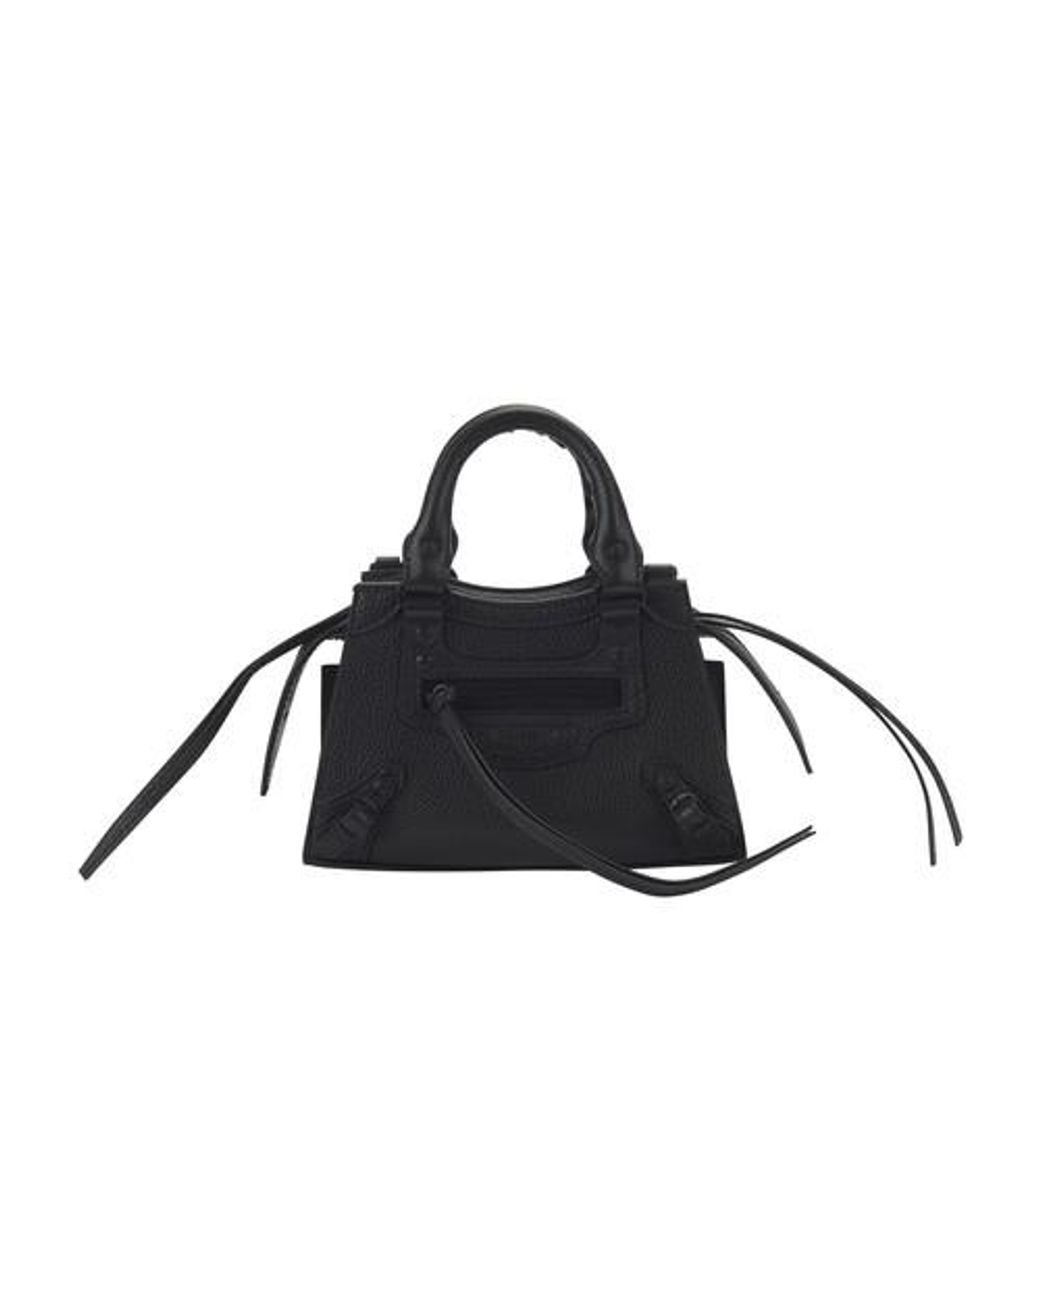 Balenciaga Neo Classic Nano Top Handle Bag in Black - Lyst